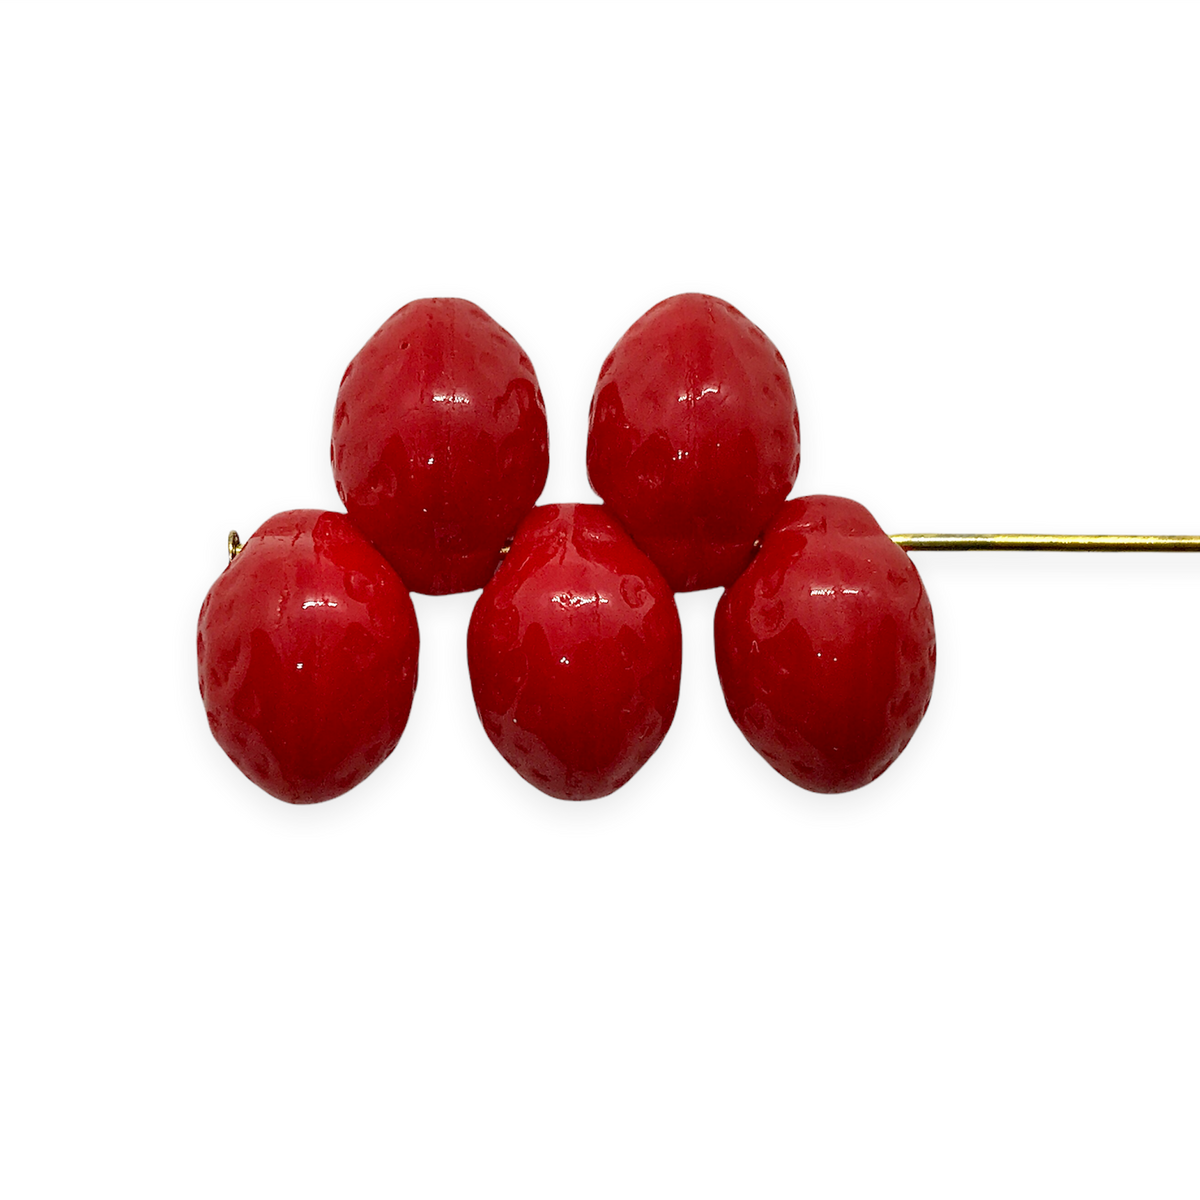 Czech glass strawberry fruit beads 12pc opaque red black seeds 11x8mm –  Orange Grove Beads